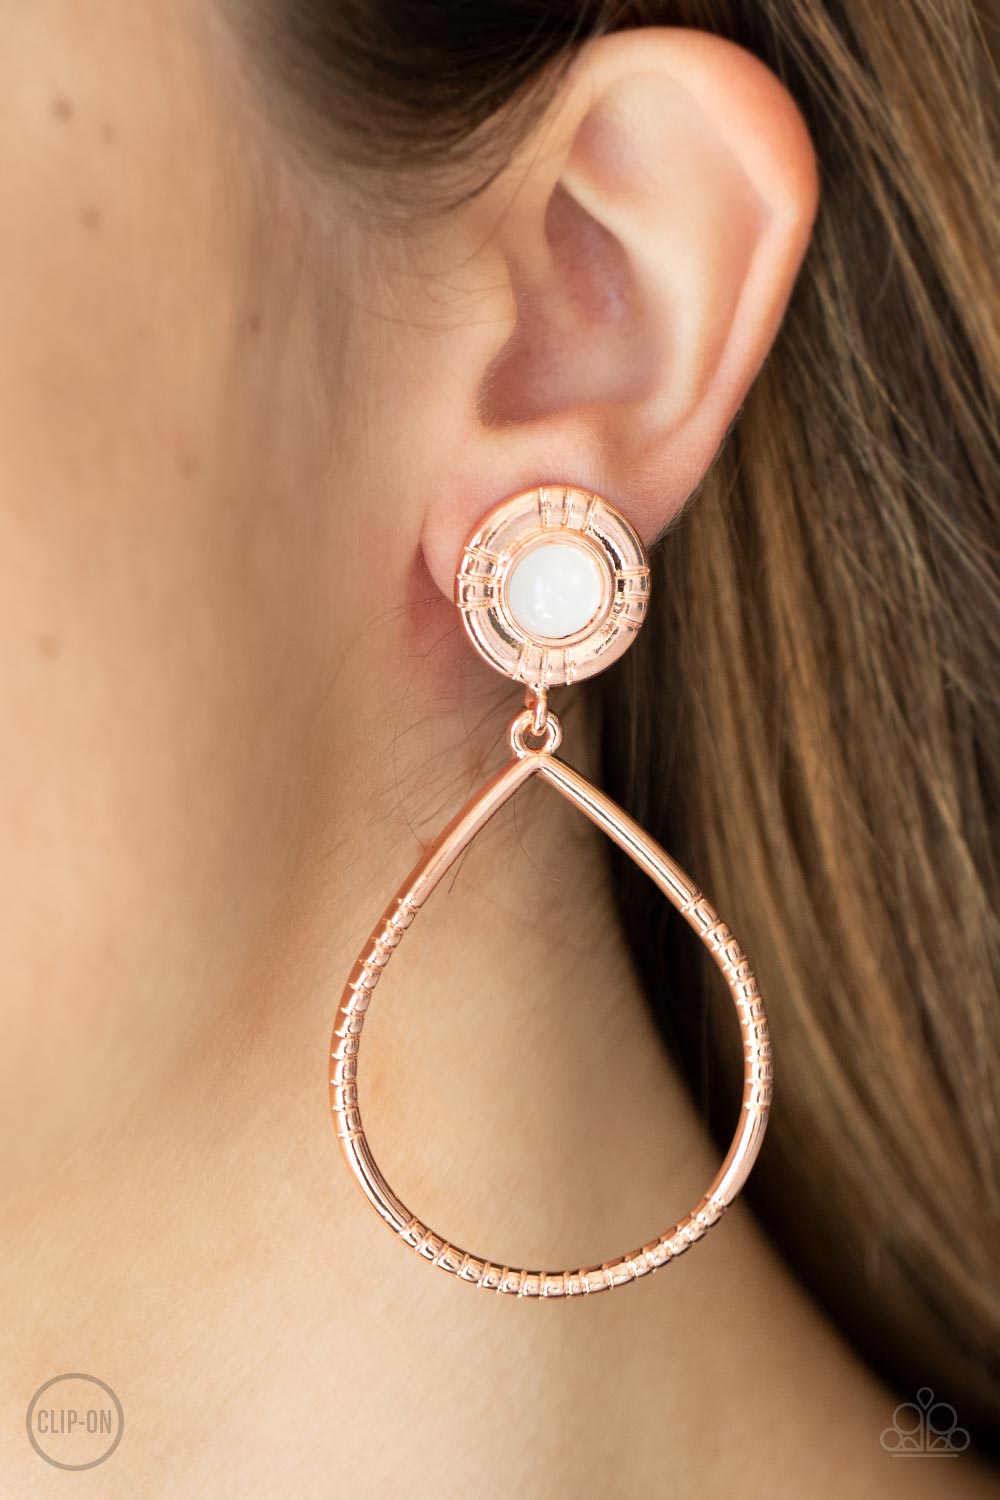 Fairytale Finish - Copper Clip-On Earrings - Princess Glam Shop